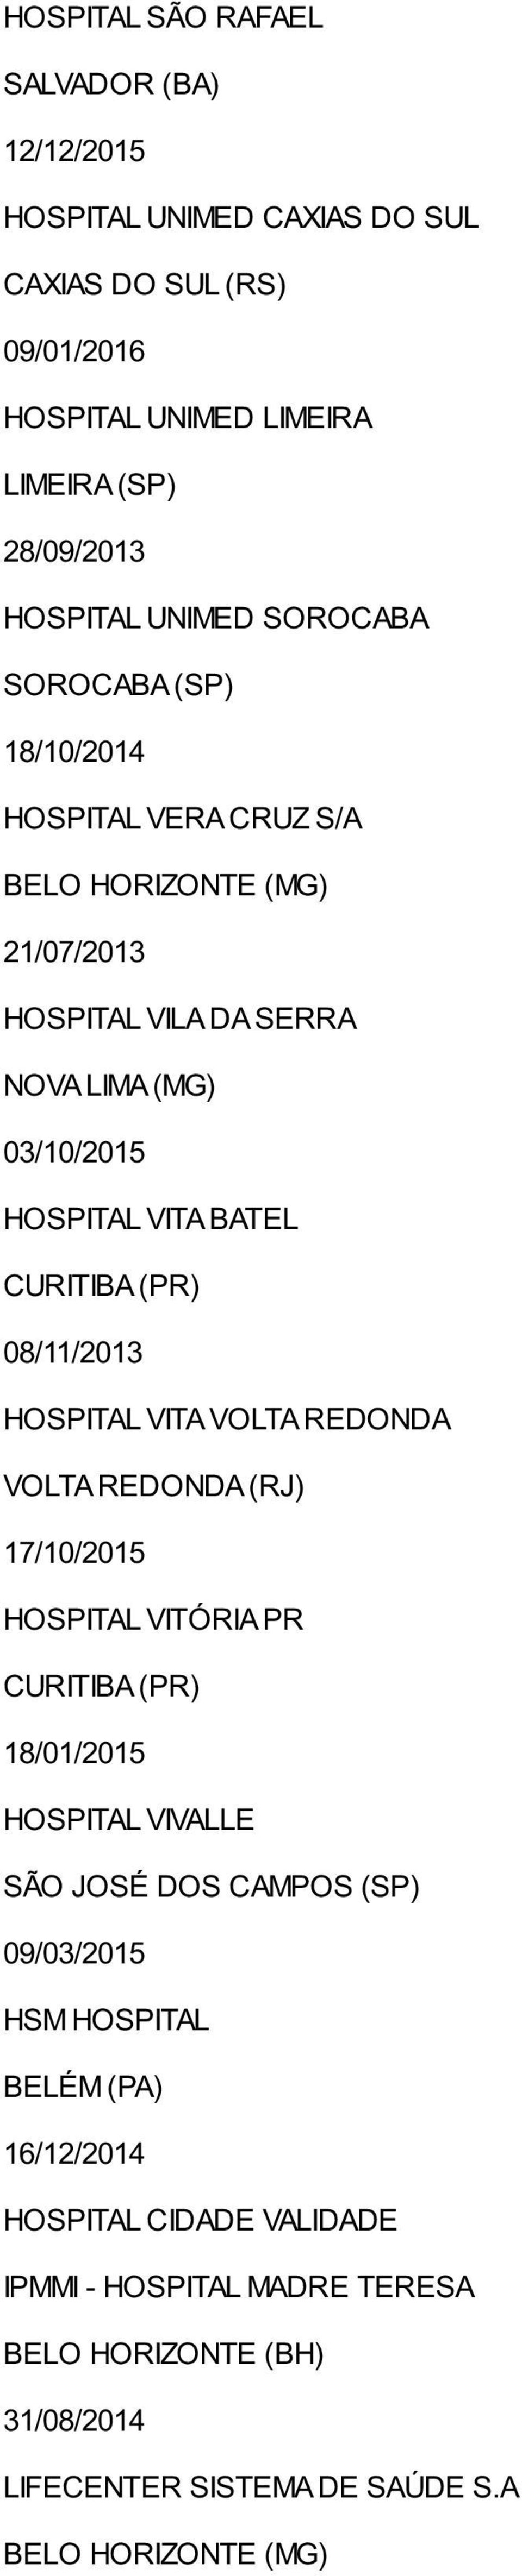 08/11/2013 HOSPITAL VITA VOLTA REDONDA VOLTA REDONDA (RJ) 17/10/2015 HOSPITAL VITÓRIA PR 18/01/2015 HOSPITAL VIVALLE SÃO JOSÉ DOS CAMPOS (SP) 09/03/2015